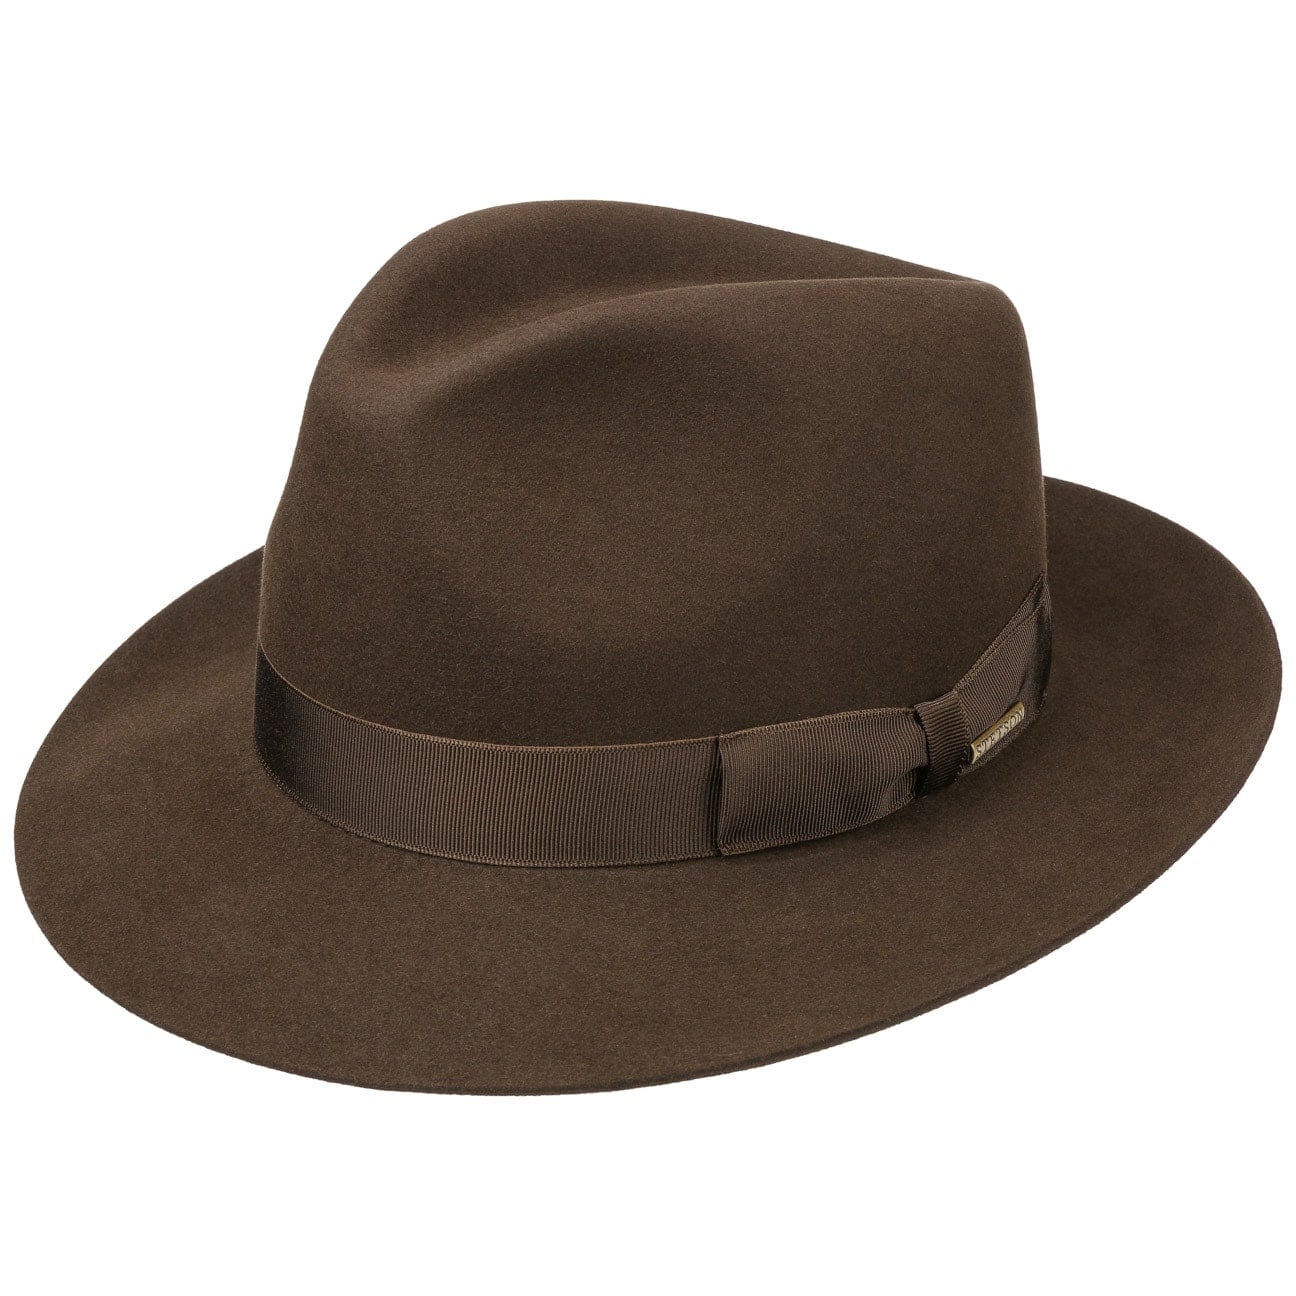 Penn Bogart Hat by Stetson, EUR 129,00 --> Hats, caps & beanies shop ...